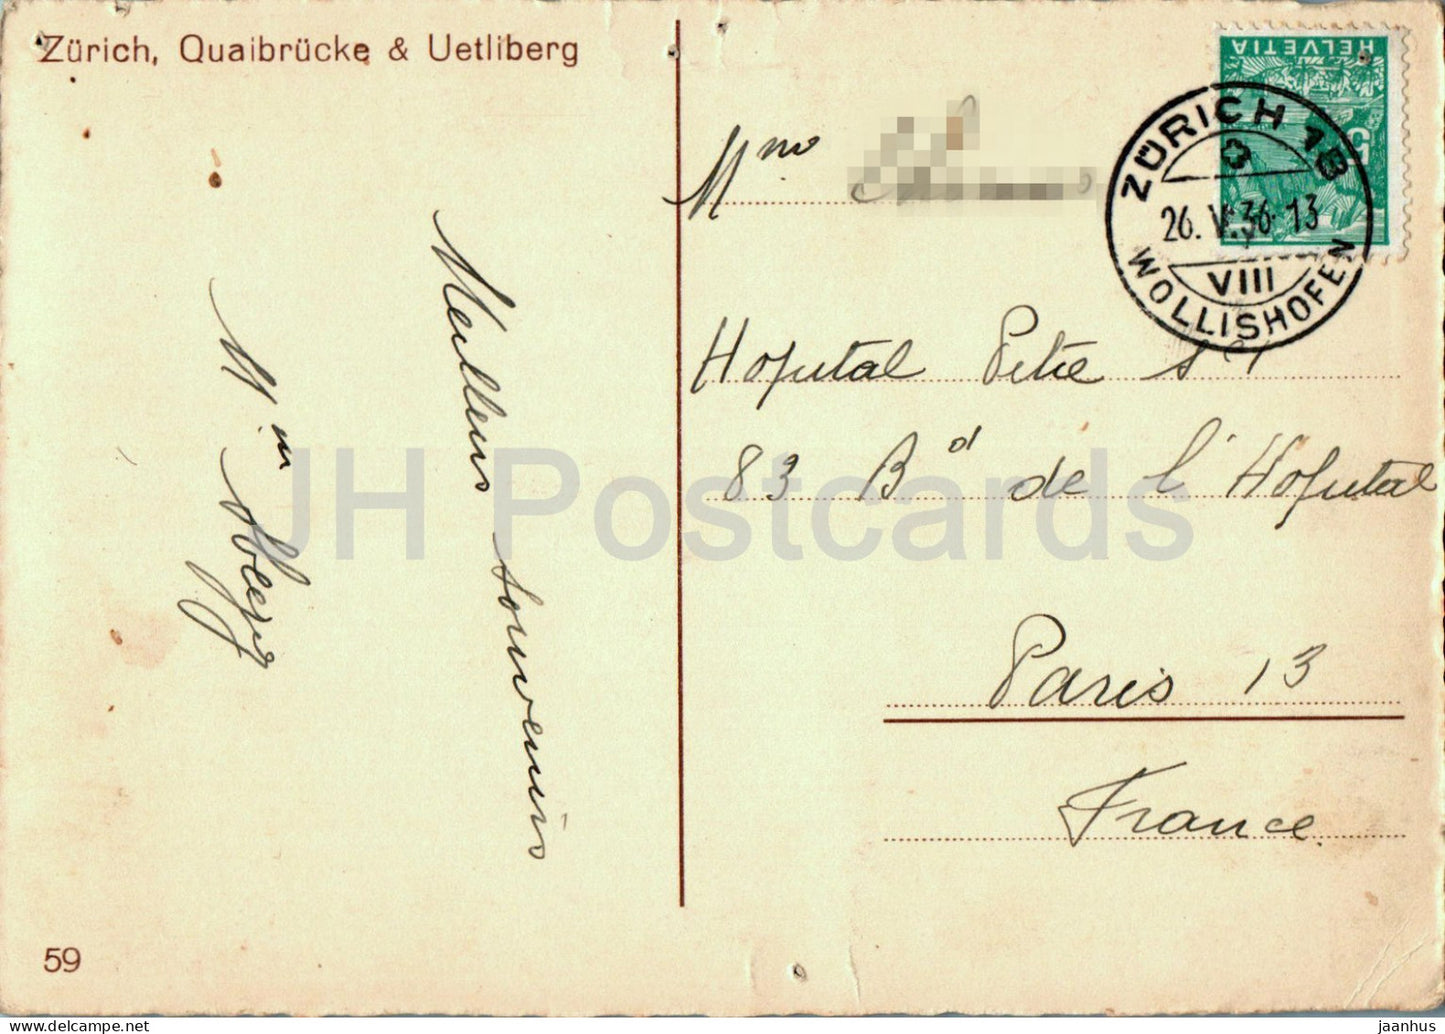 Zürich - Quaibrücke - Uetliberg - Straßenbahn - Brücke - alte Postkarte - 59 - 1936 - Schweiz - gebraucht 